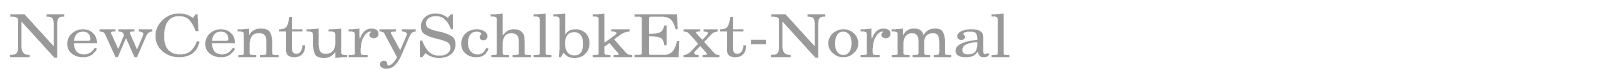 NewCenturySchlbkExt-Normal font preview